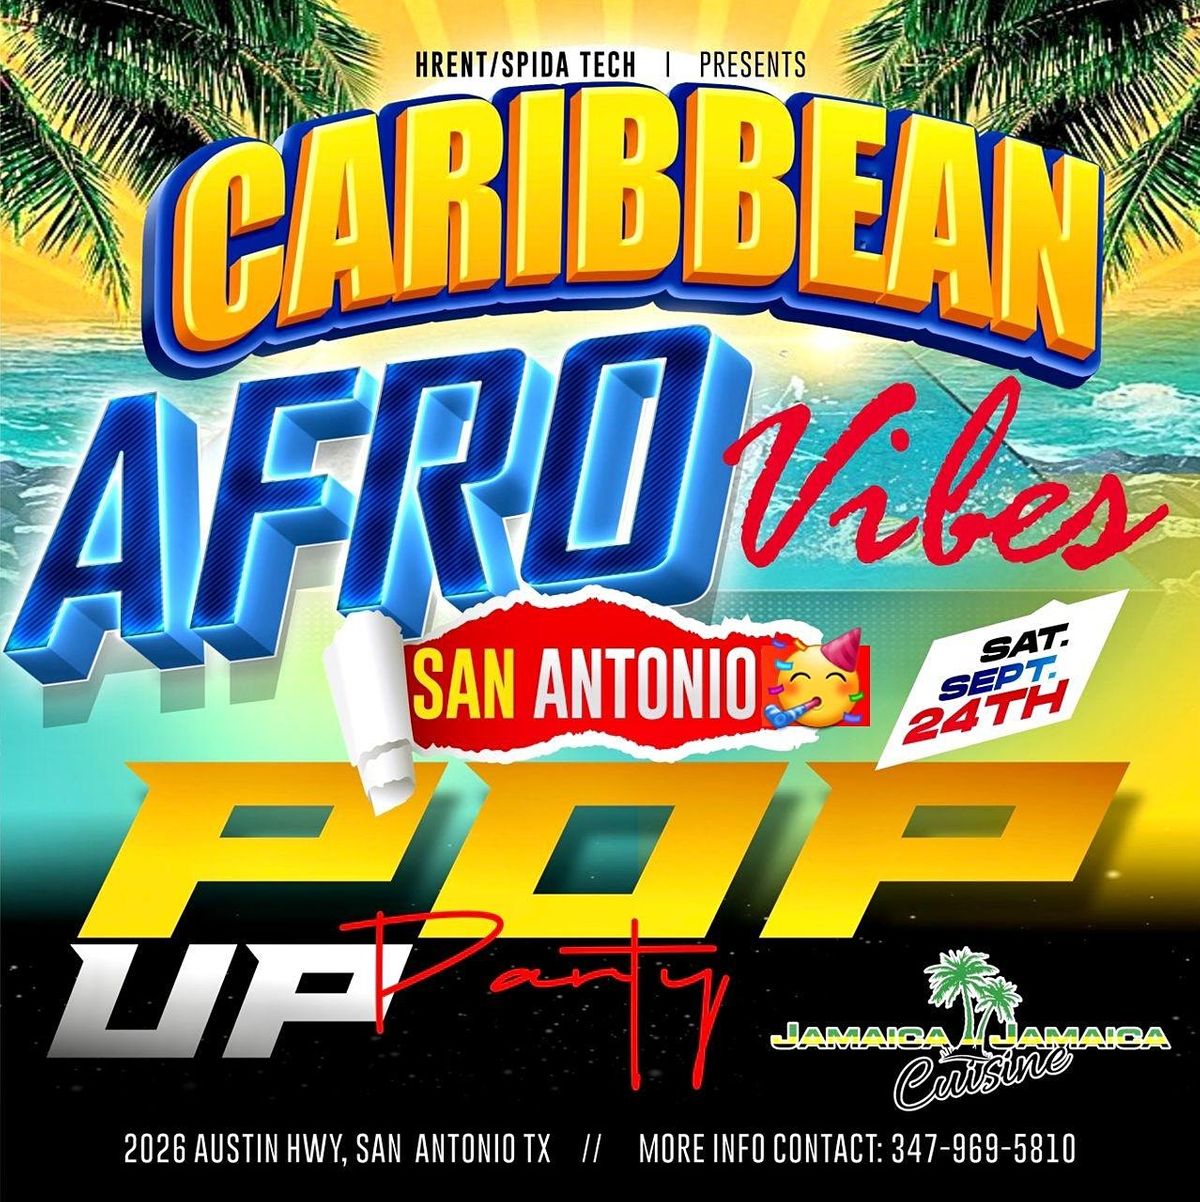 Caribbean Afro Vibes Pop Party, Jamaica Jamaica Cuisine - Austin Hwy ...